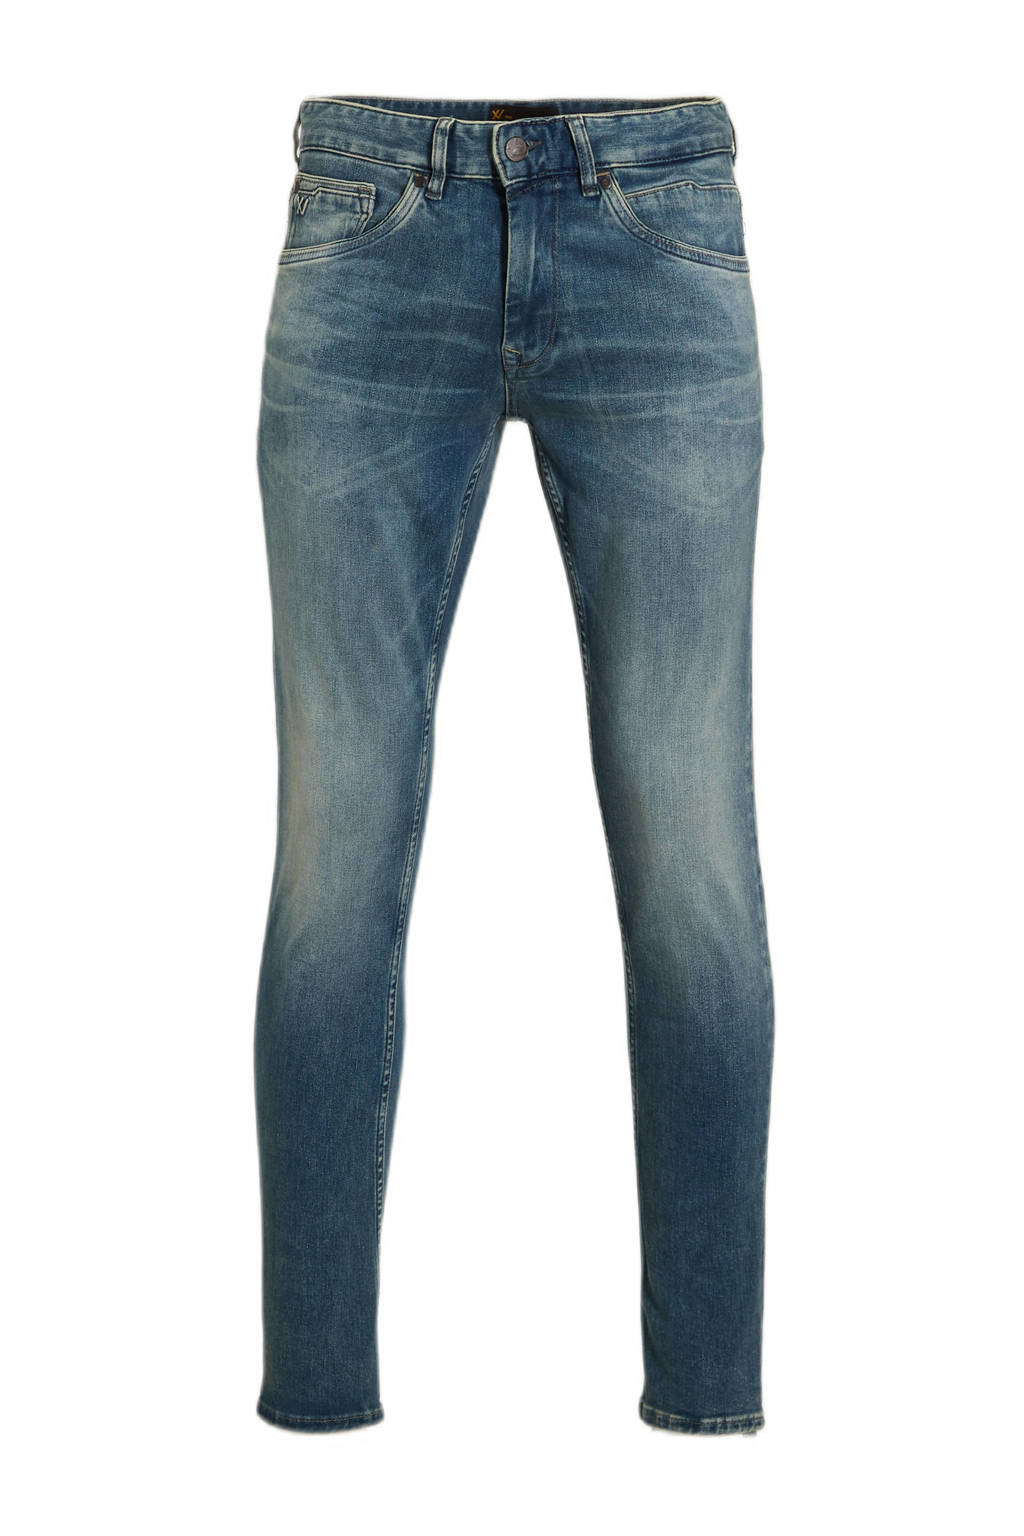 PME Legend slim fit jeans sky dirt XV wash | wehkamp